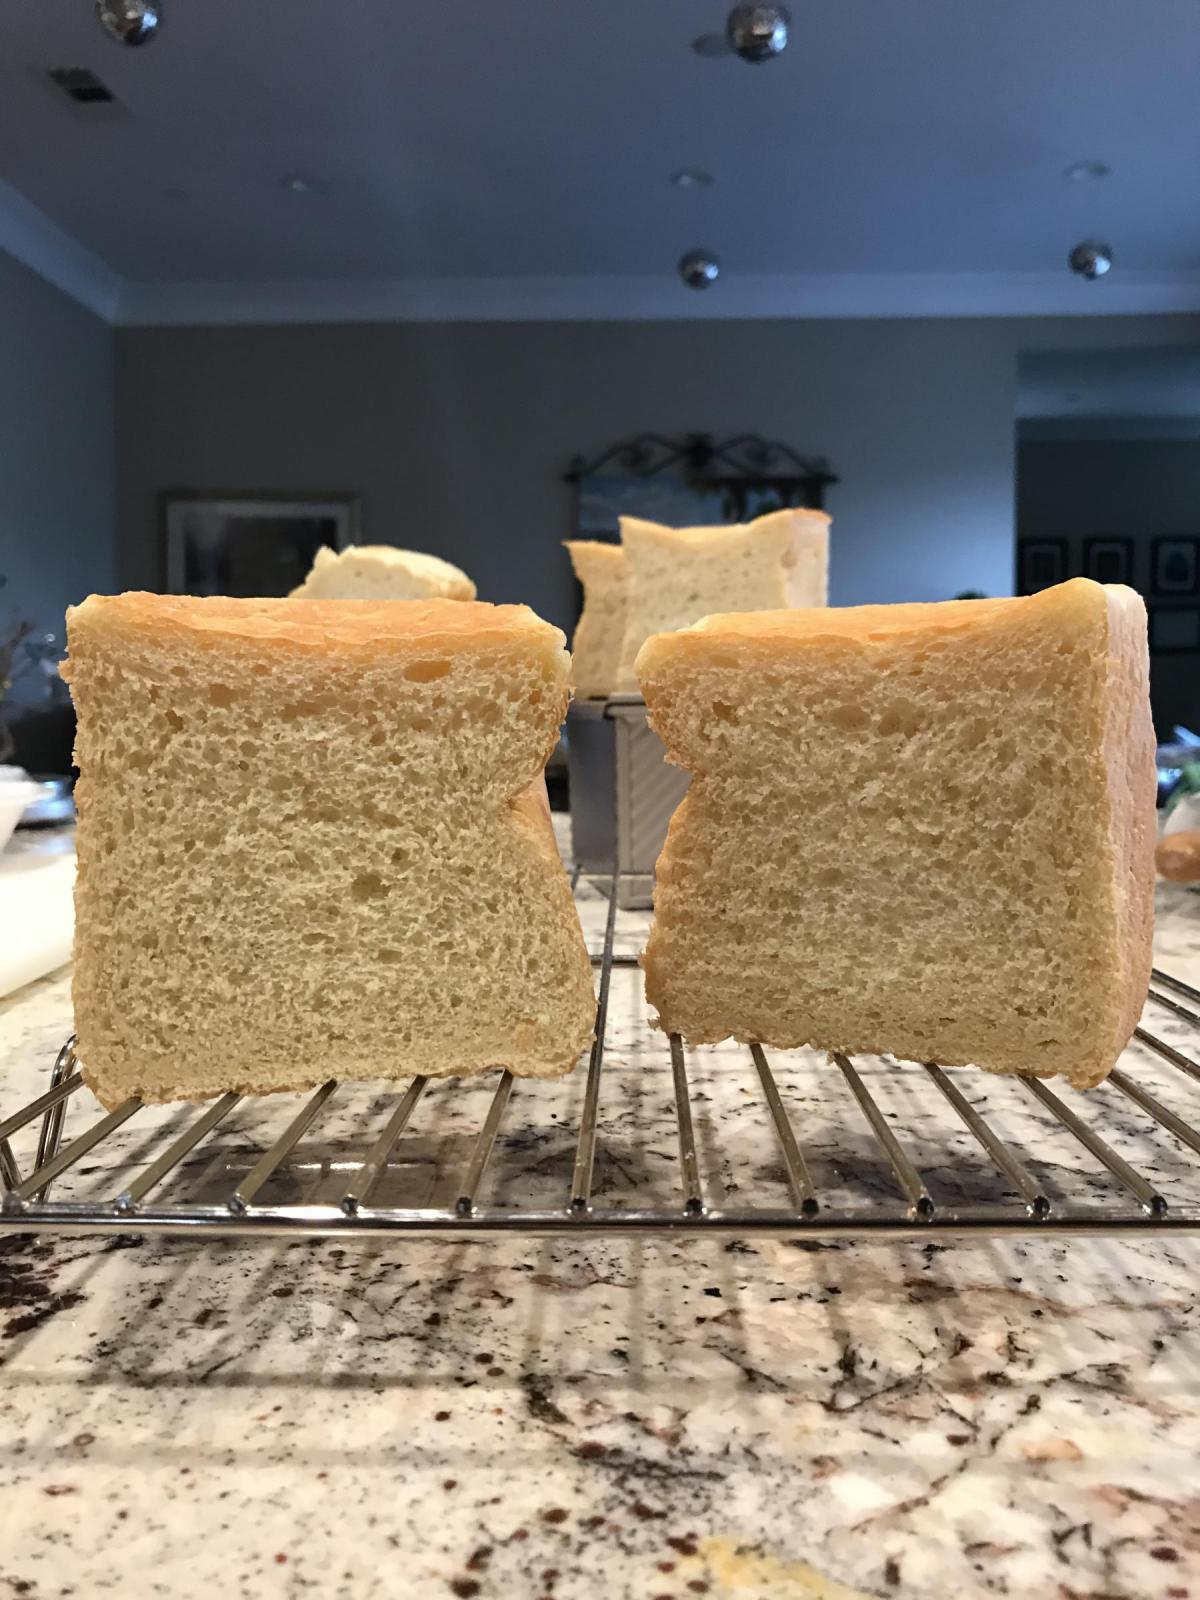 Loaf split down the middle